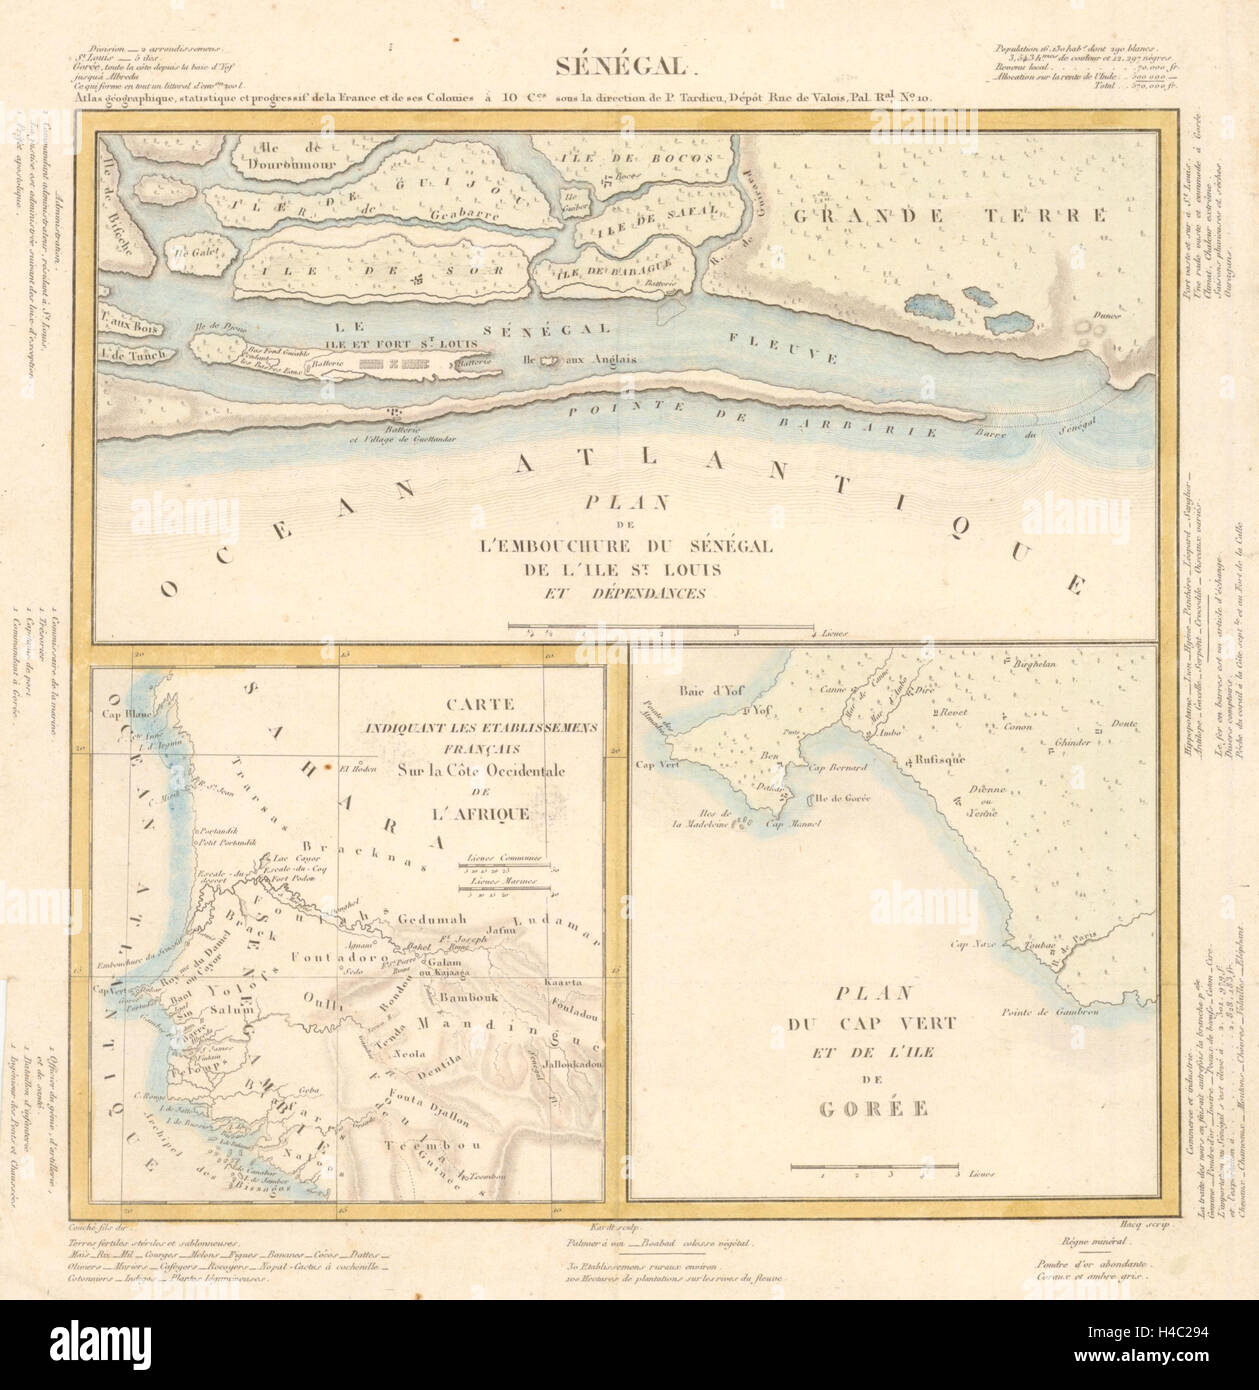 Senegal. Ile St. Louis. Ile de Gorée. Dakar. By P. Tardieu 1830 old map Stock Photo